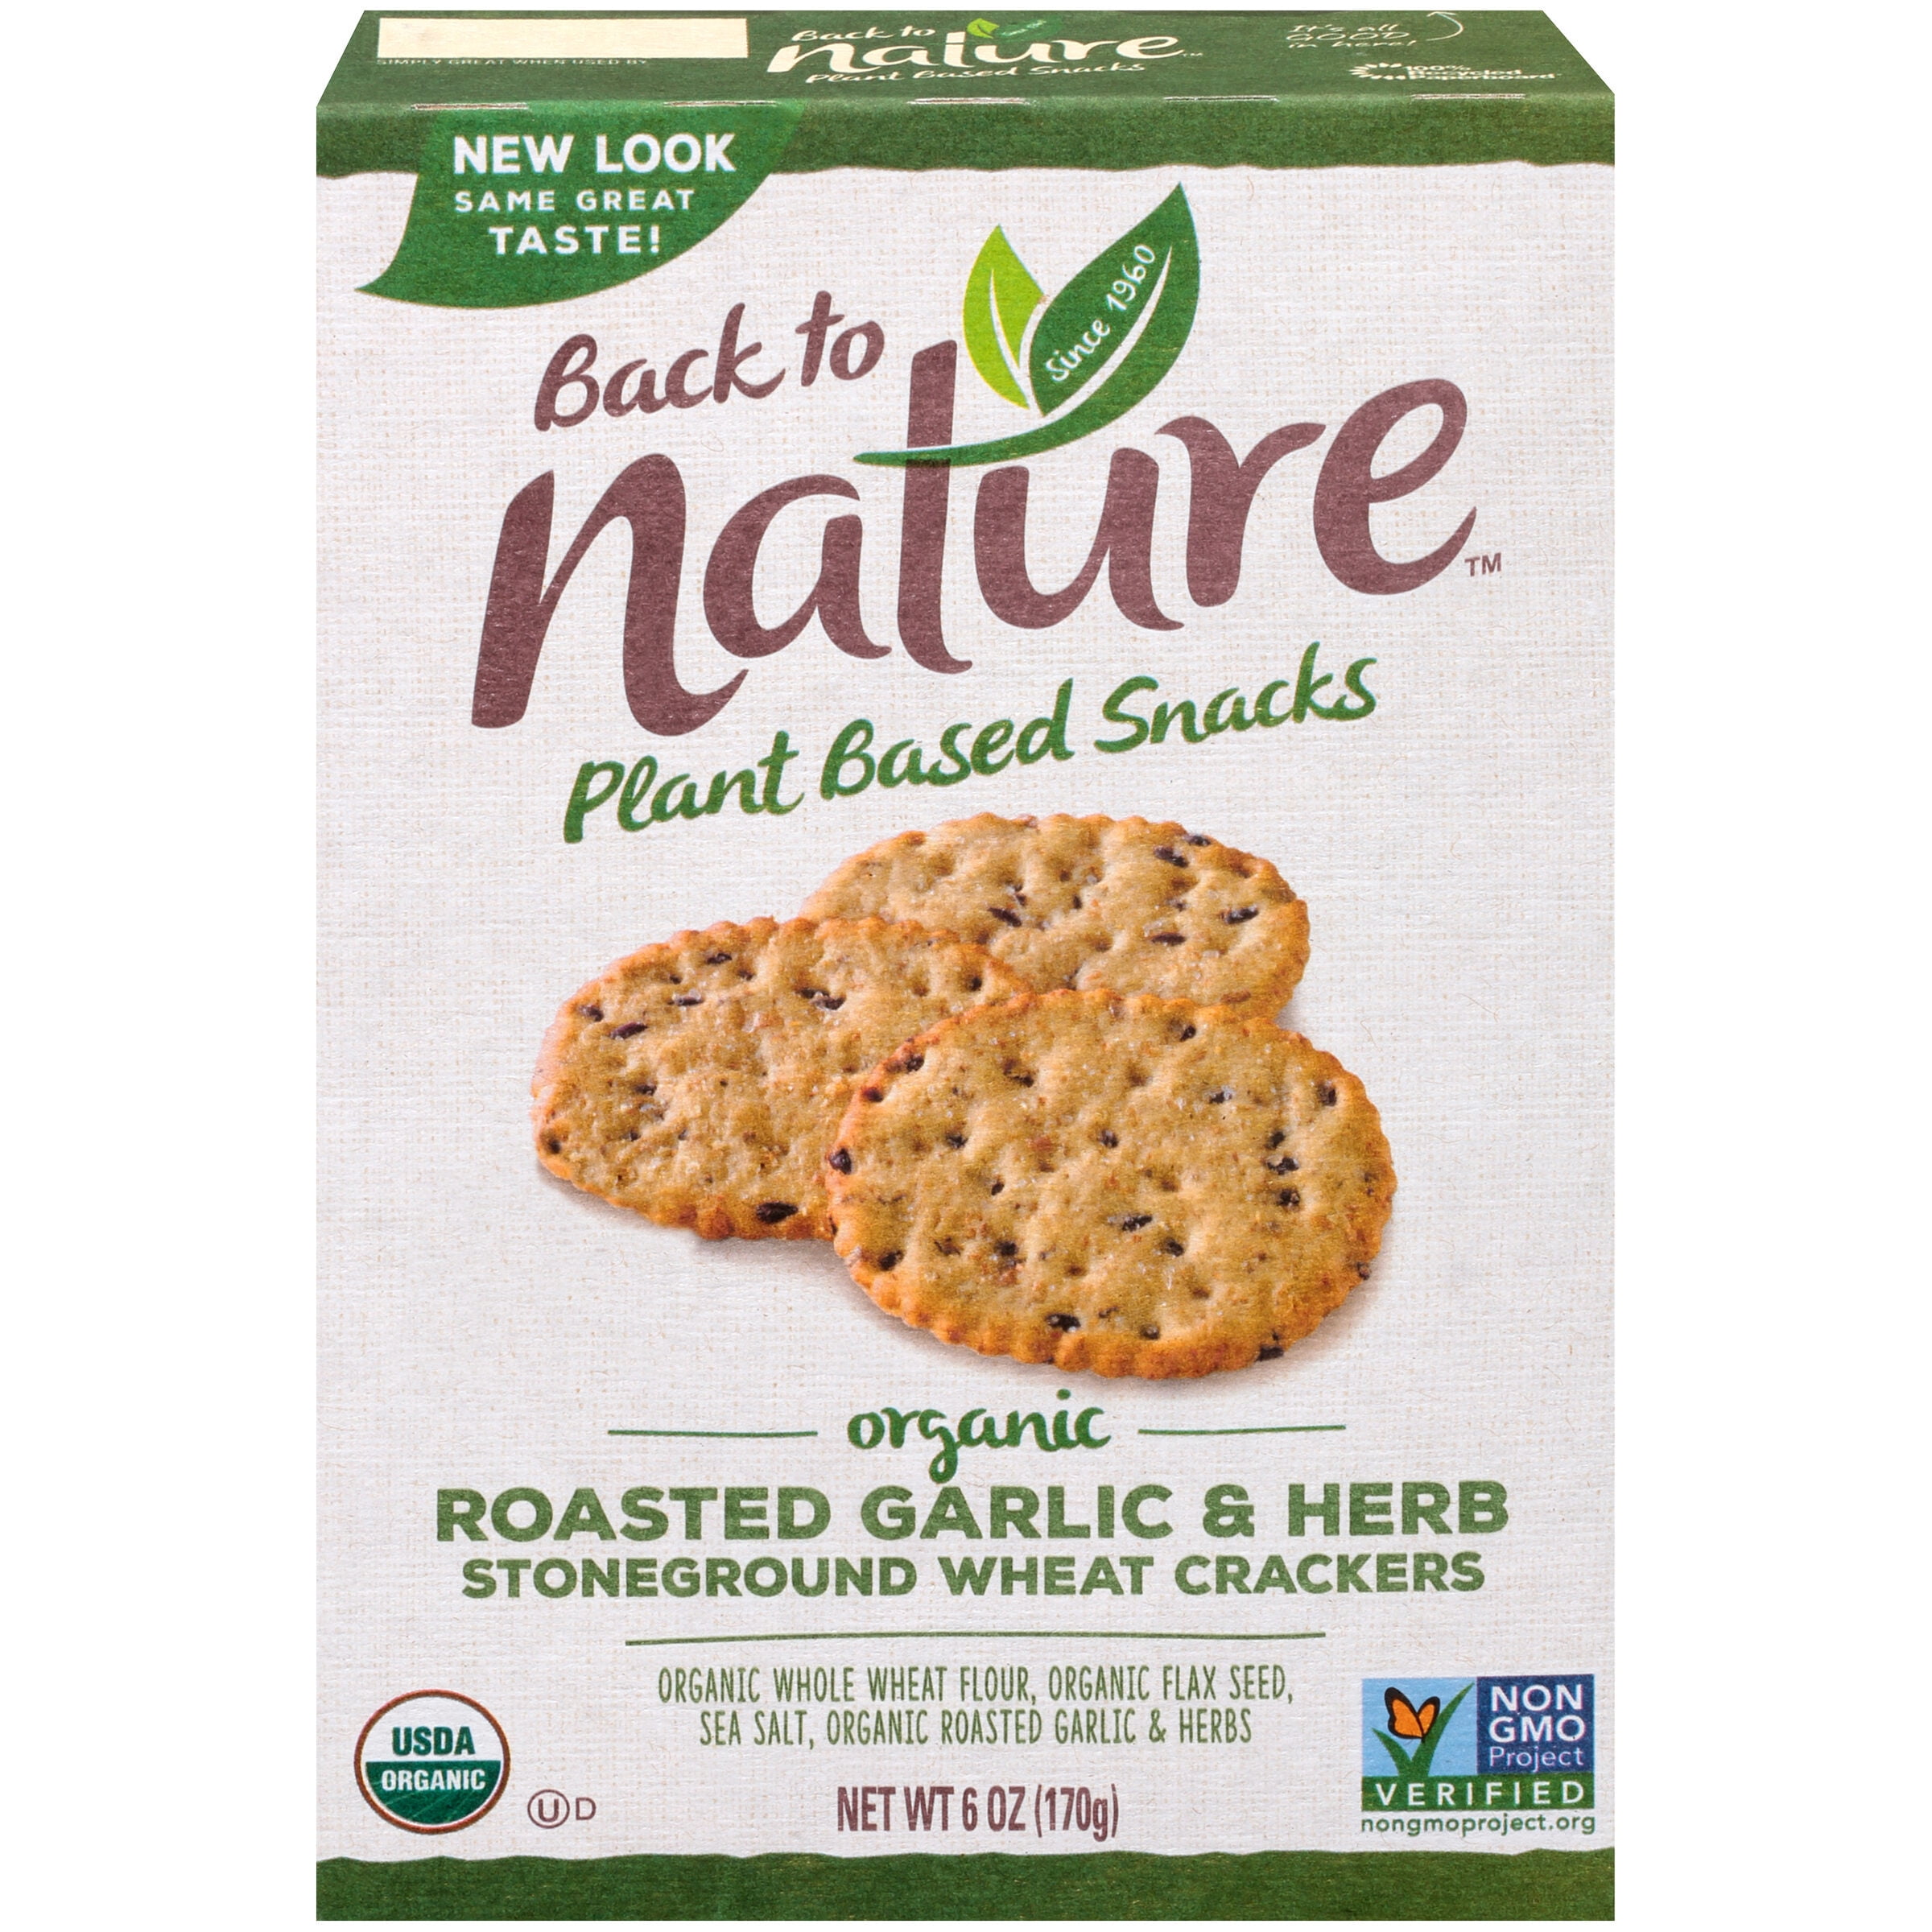 Photo 1 of 2 pack of Back to Nature Plant Based Snacks Organic Roasted Garlic Herb Stoneground Wheat Crackers 6 oz. Box